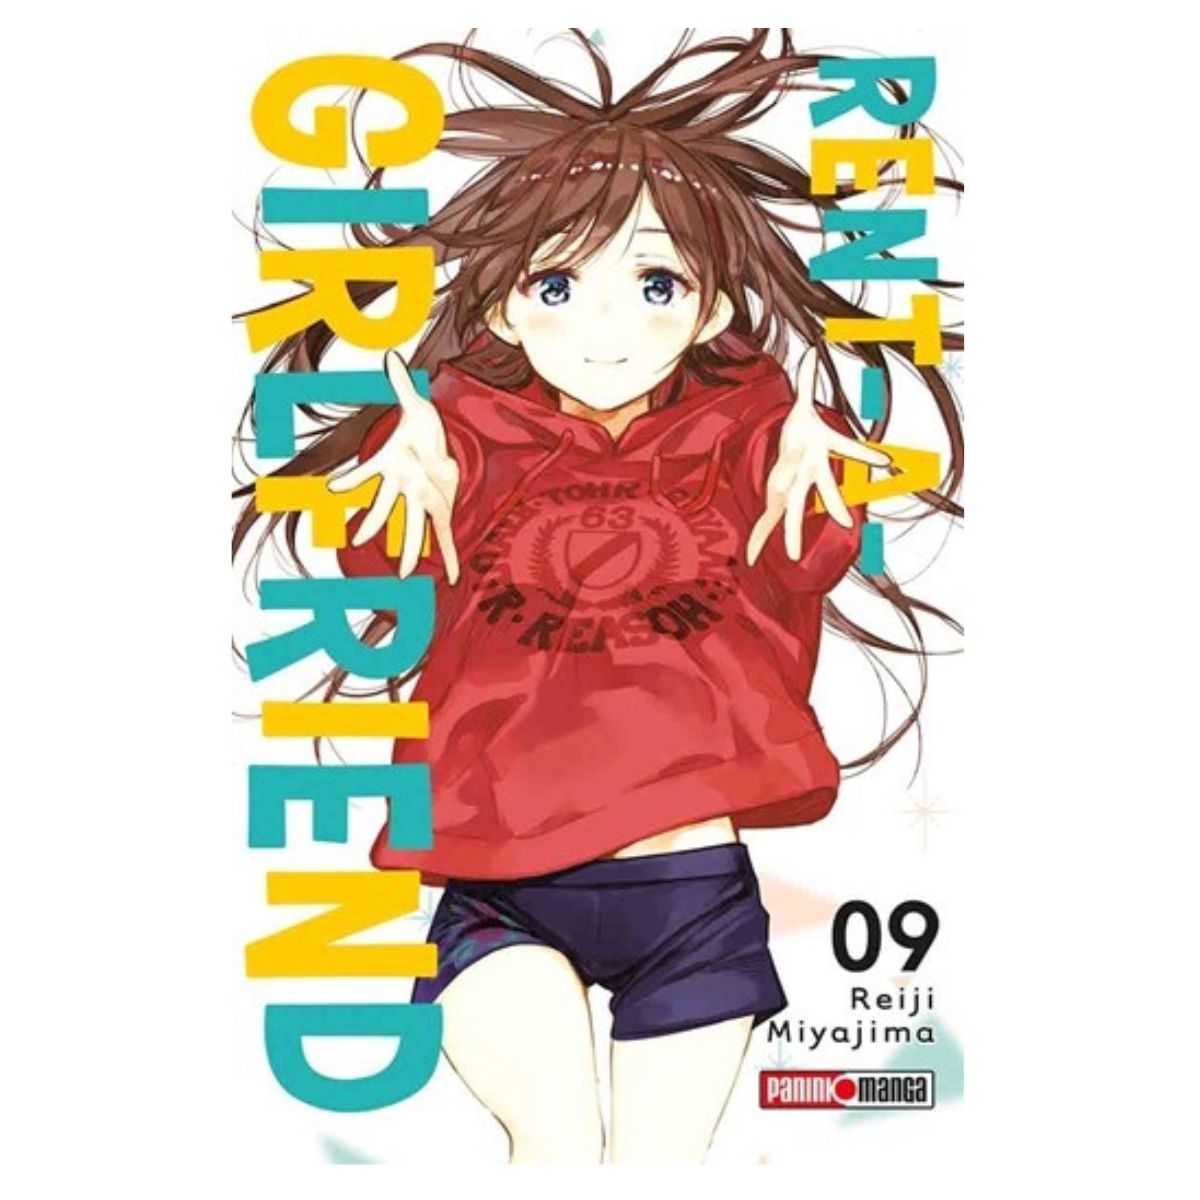 Rent A Girlfriend Tomo A Elegir Panini Manga Kanojo Anime - MarchanteMX